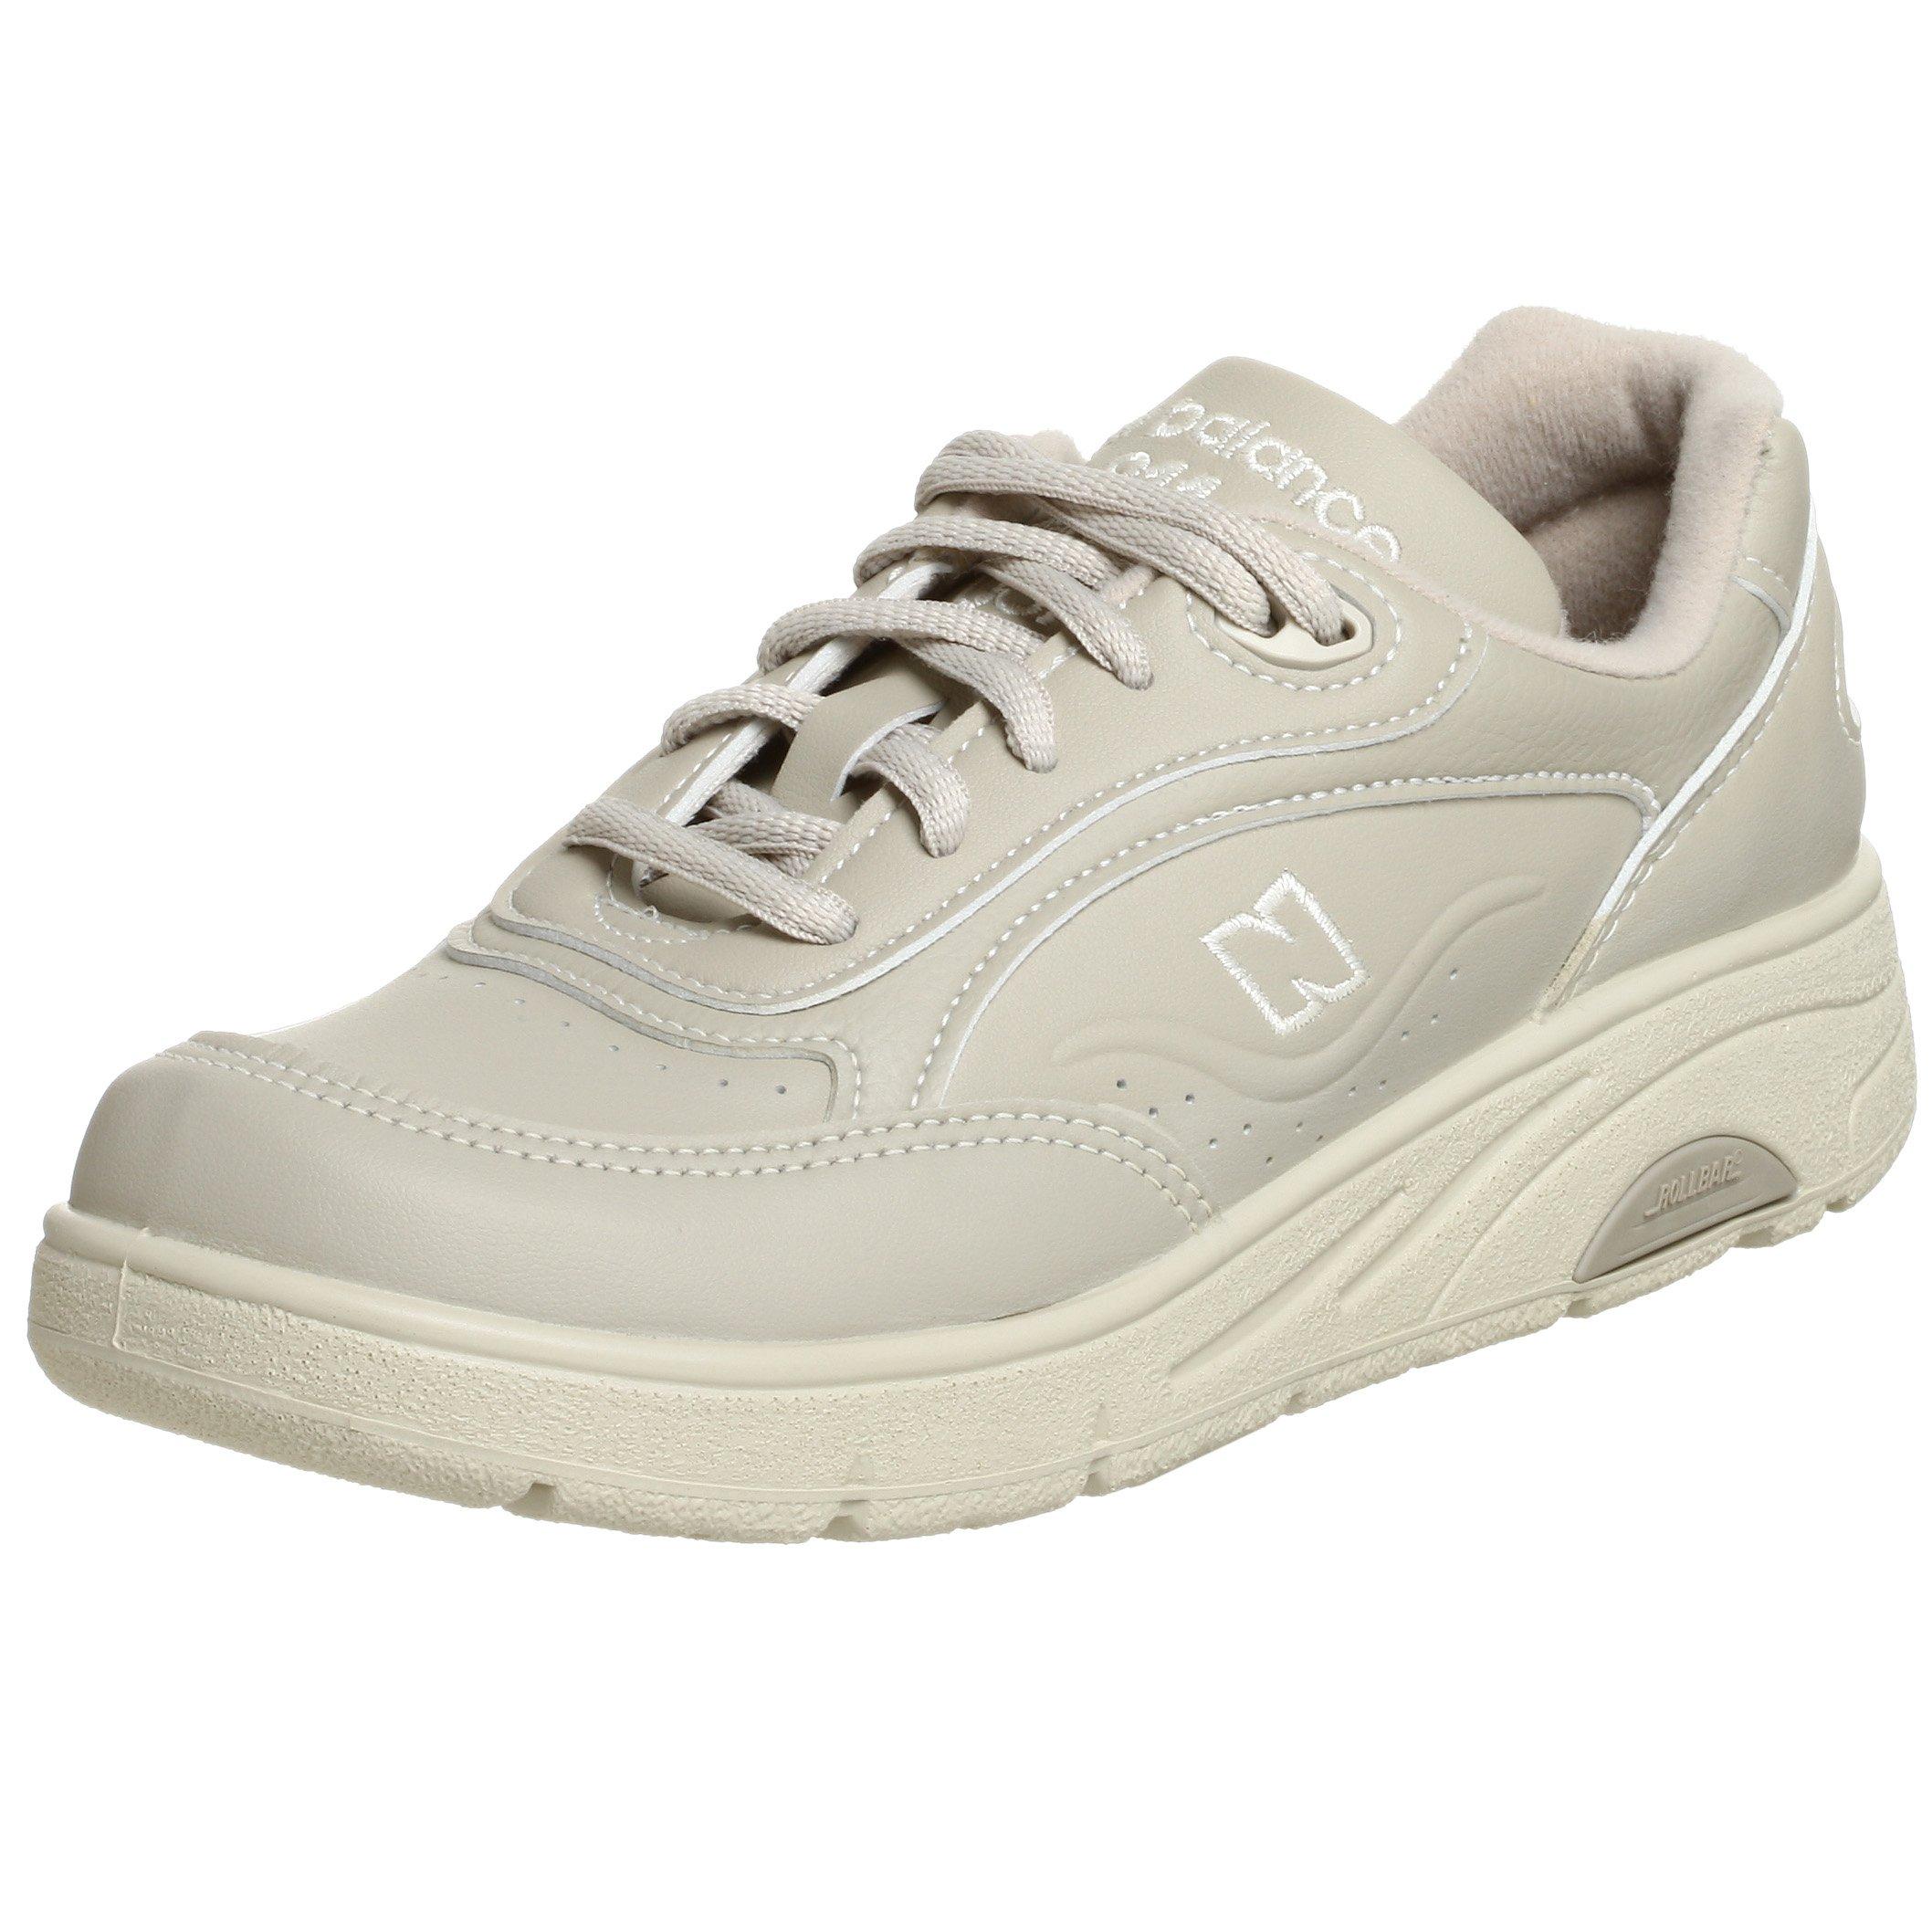 New Balance 811 V1 Walking Shoe in Natural | Lyst